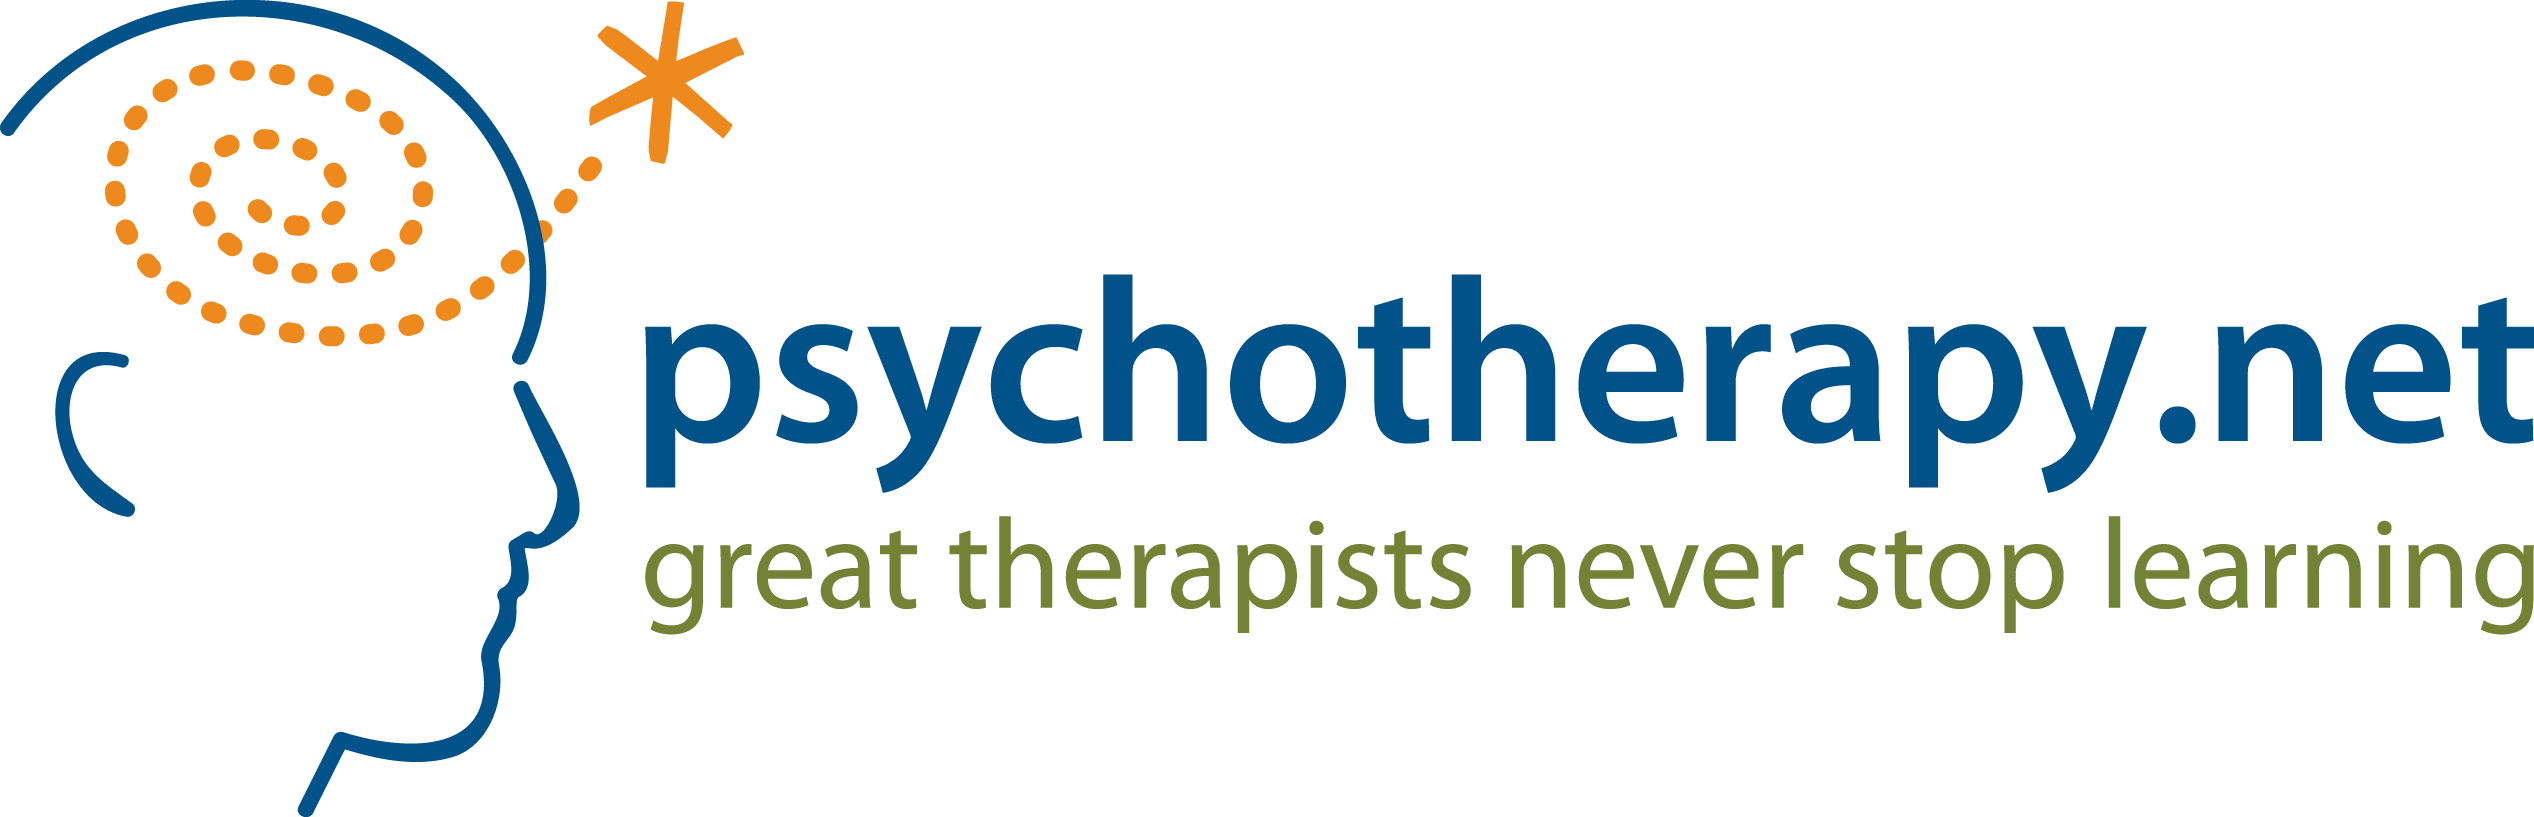 Psychotheraphy.net